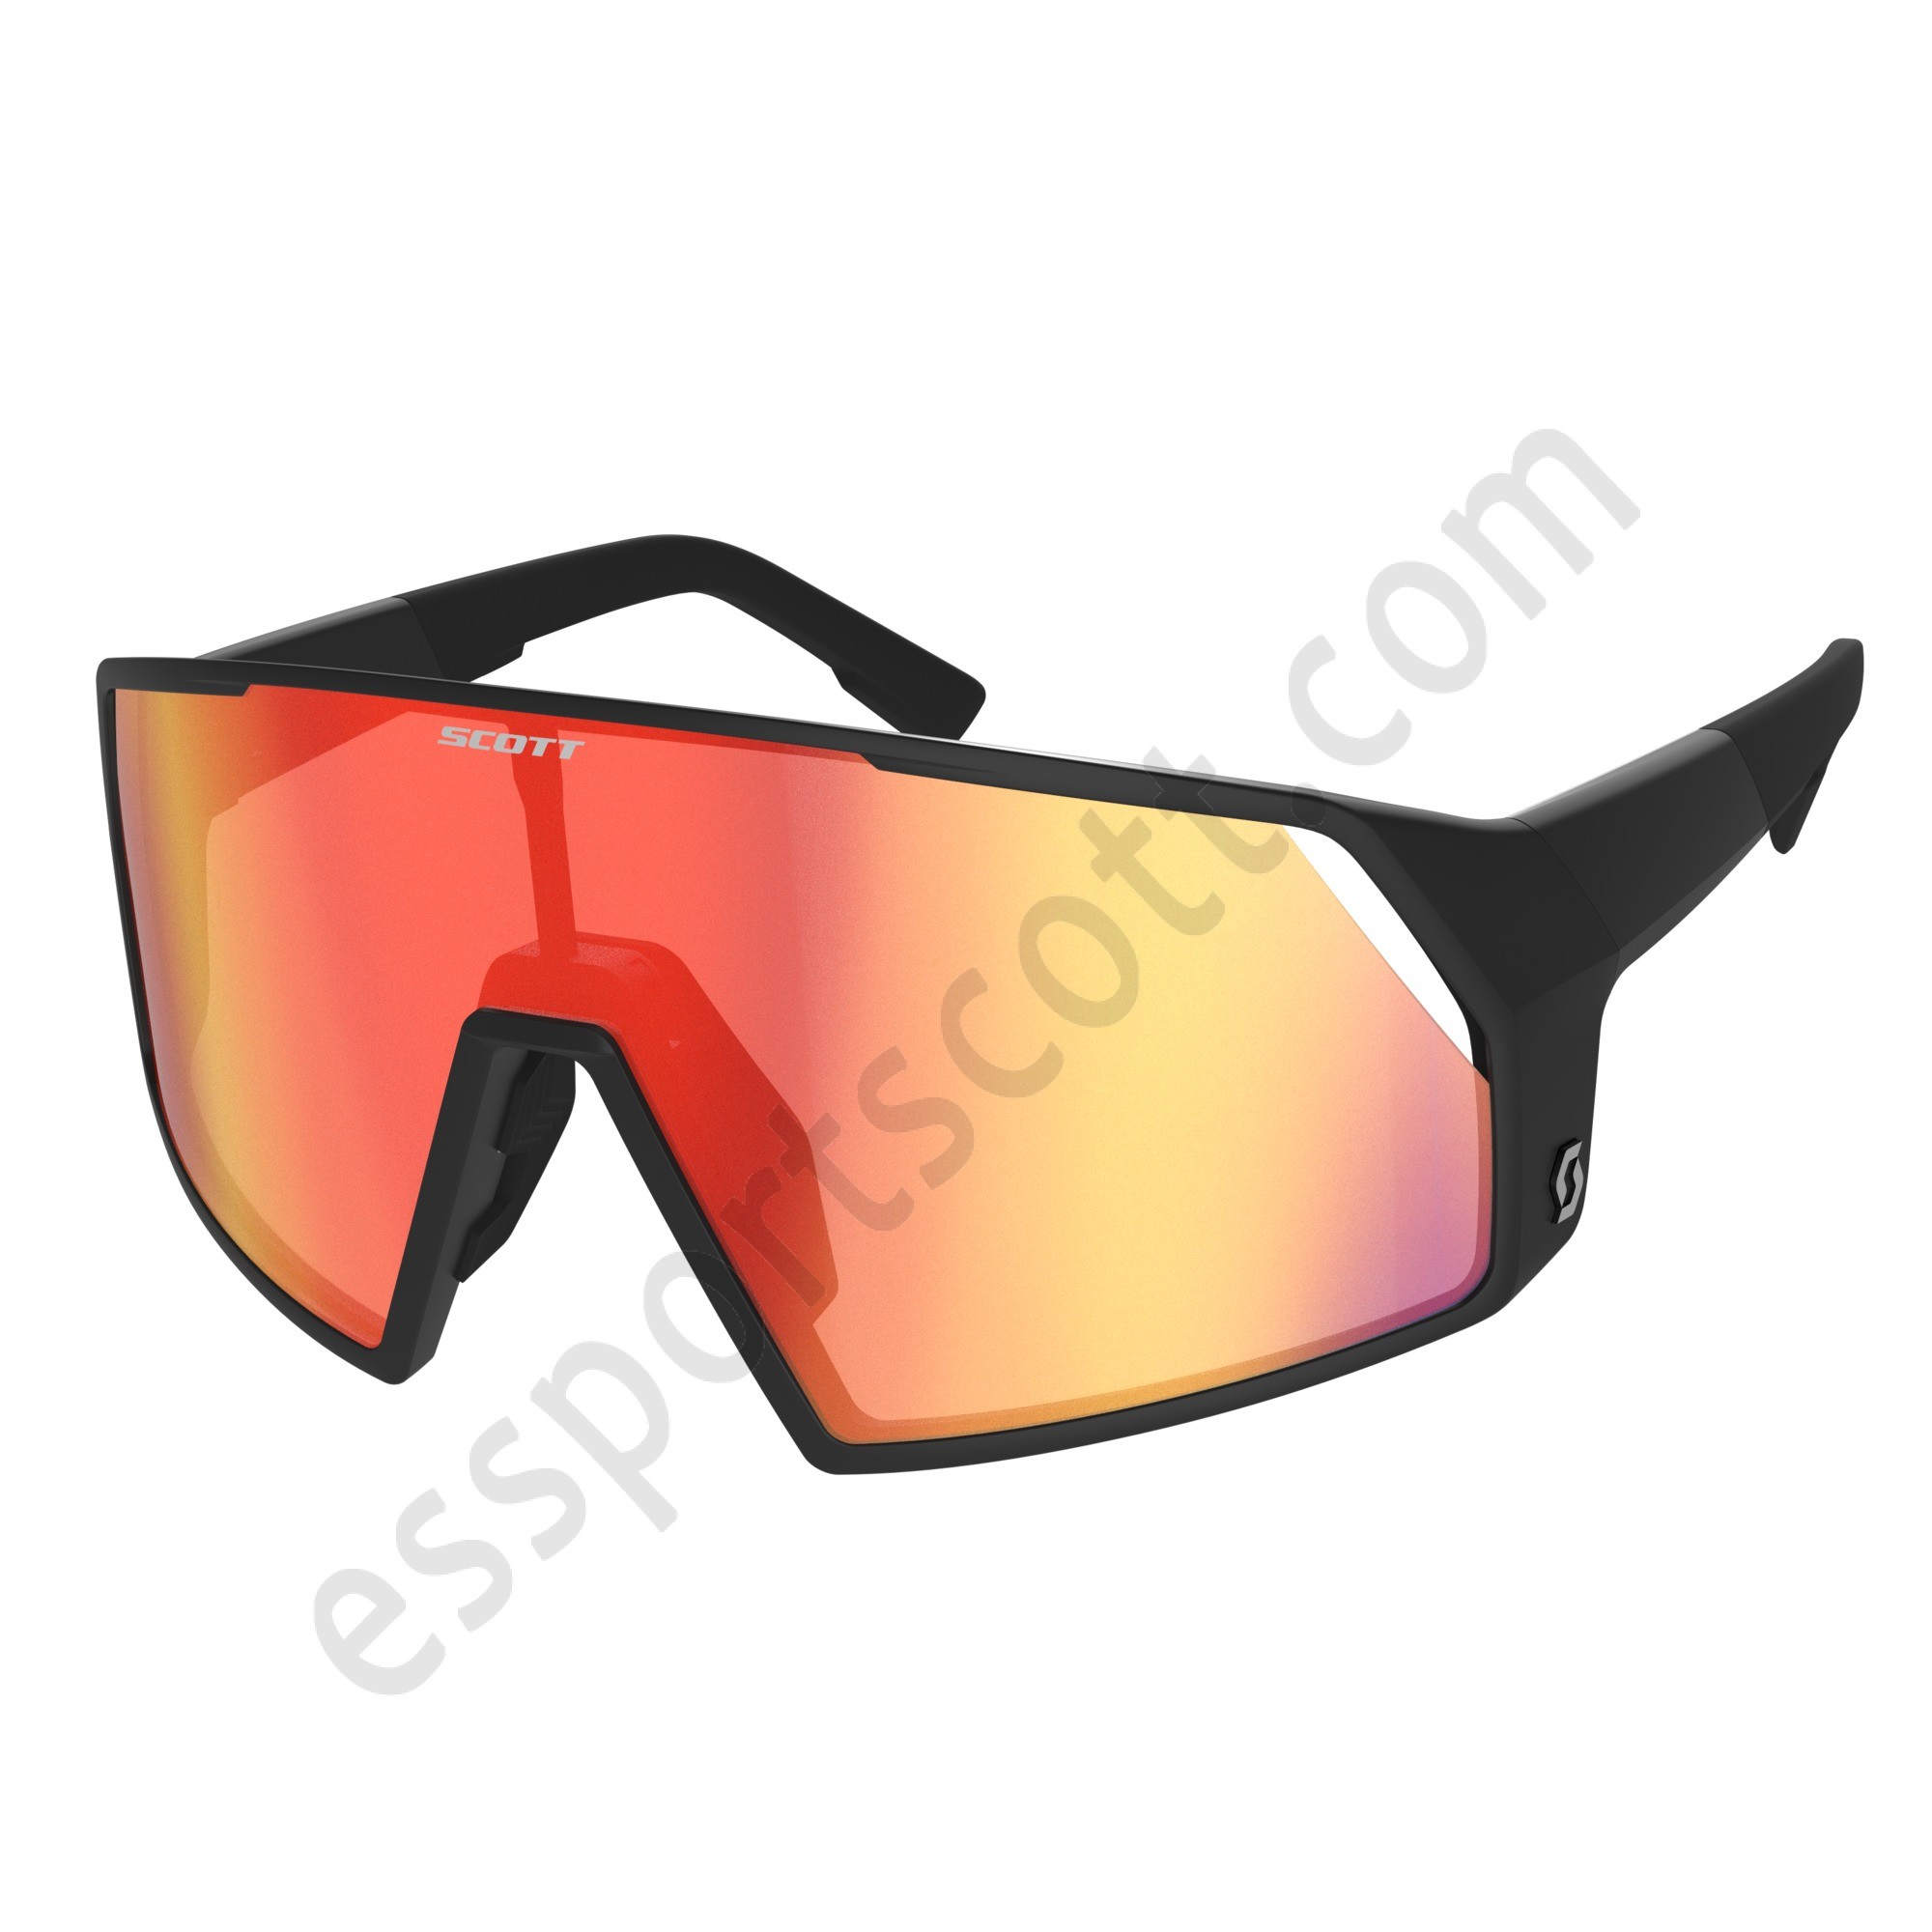 Scott Tienda ◇ Gafas de sol Pro Shield de - Scott Tienda ◇ Gafas de sol Pro Shield de